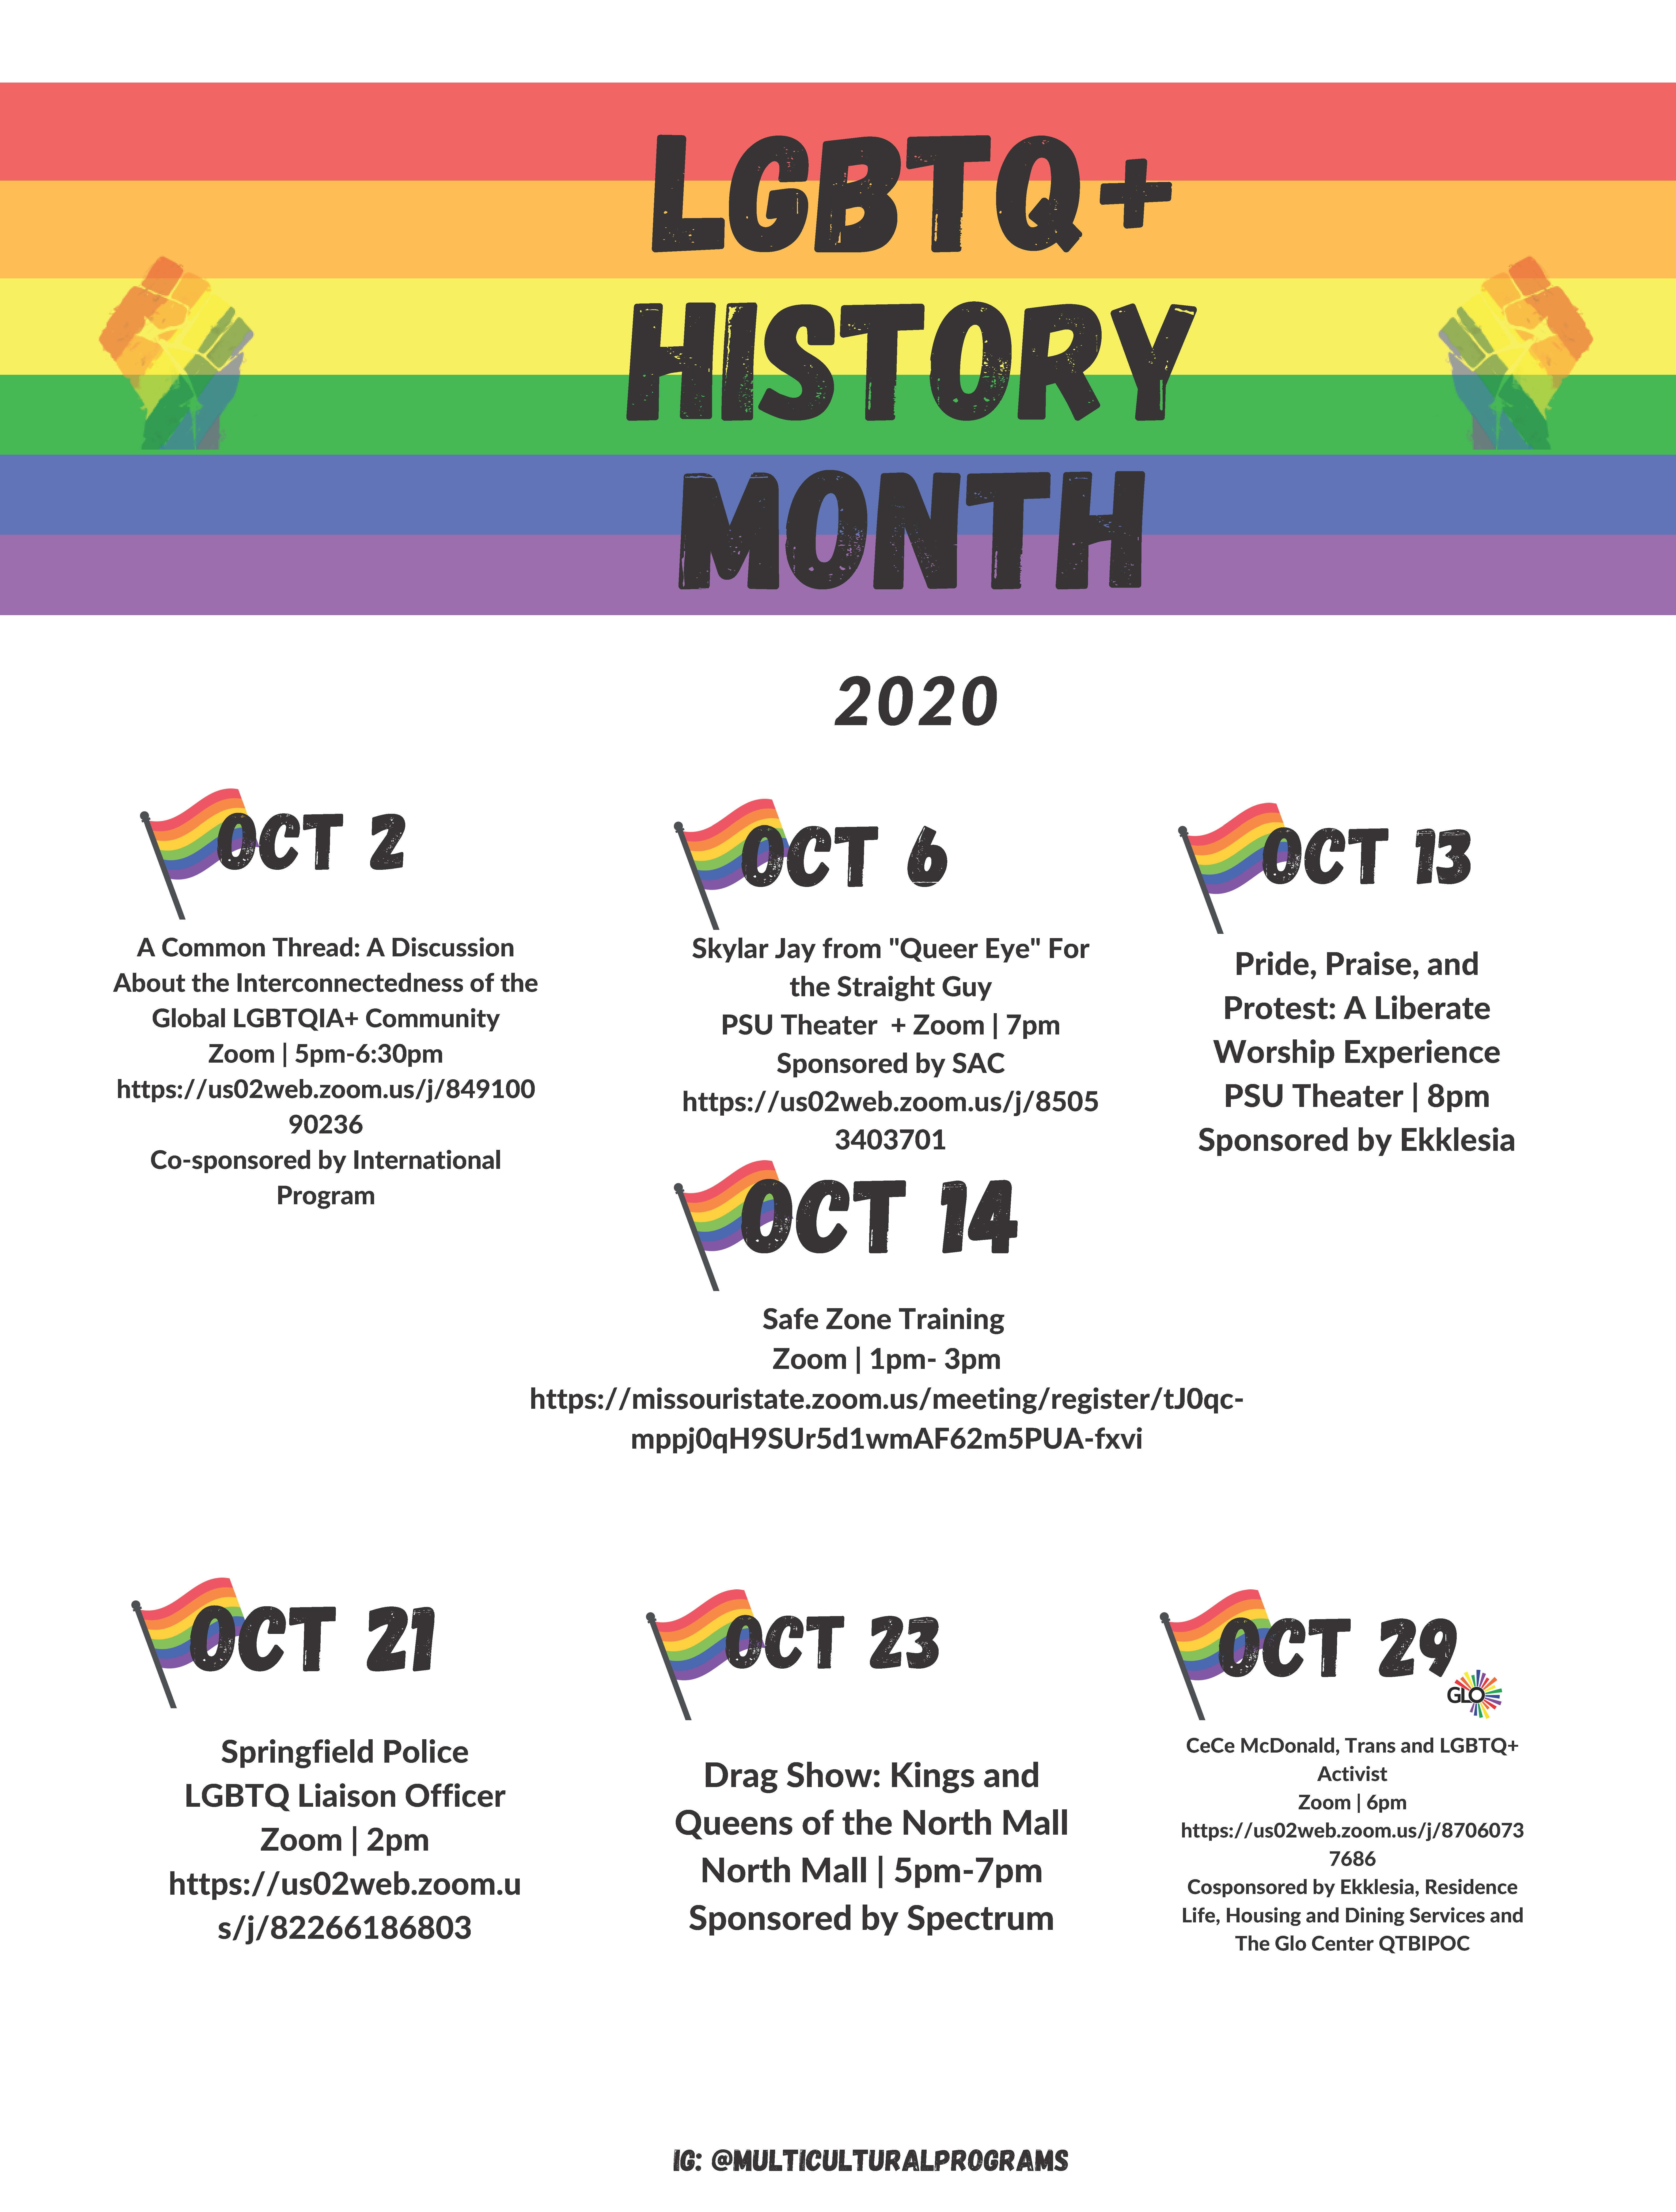 LGBTQ History Month Calendar of Events